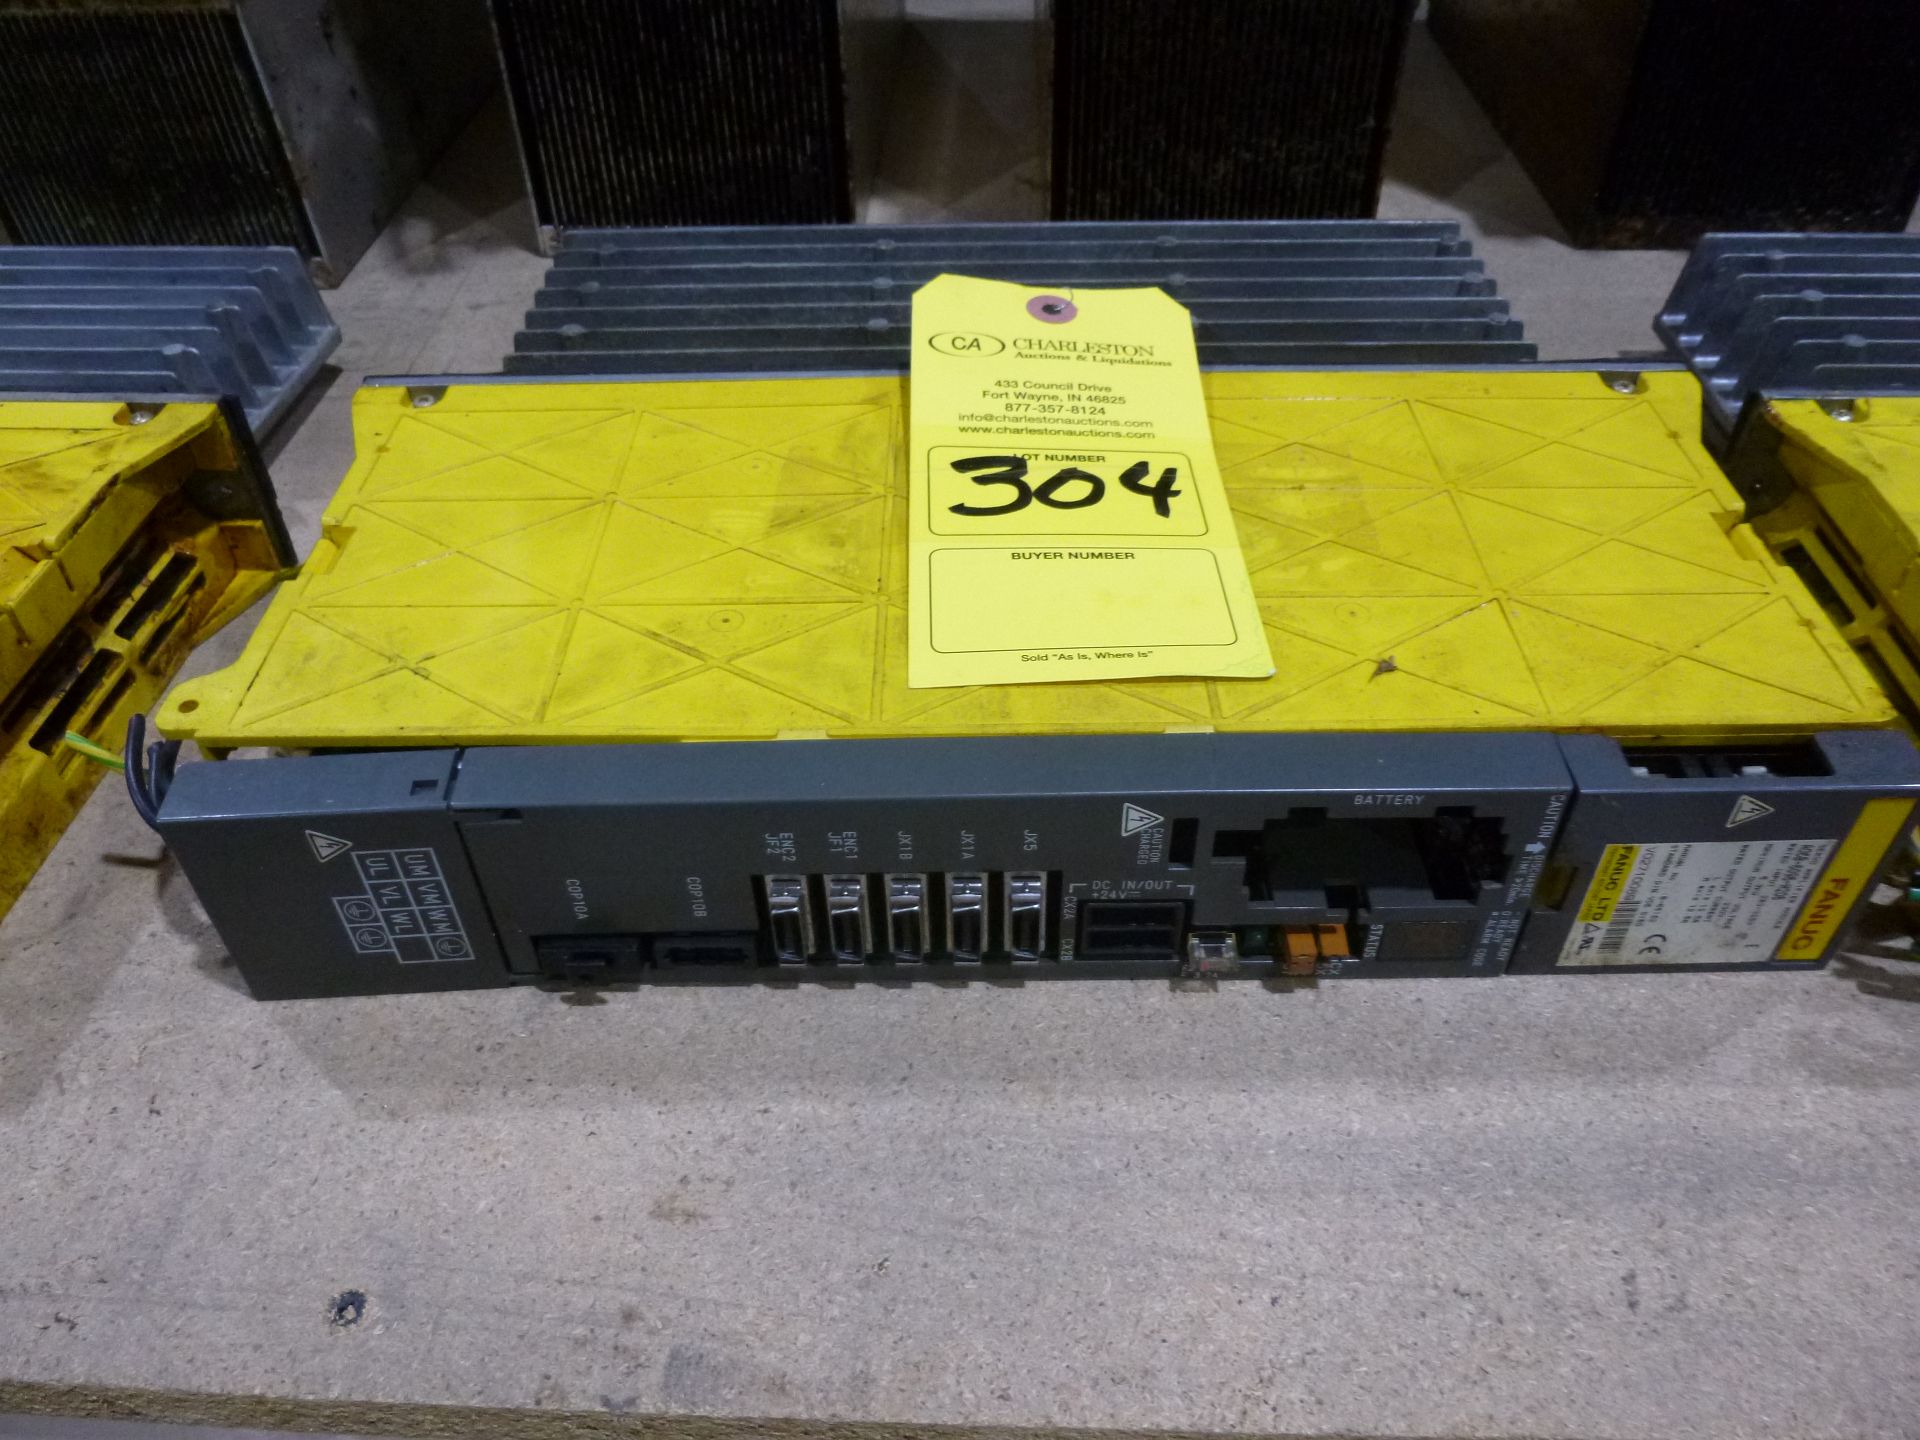 Fanuc servo amplifier module model A06B-6096-H206, as always with Brolyn LLC auctions, all lots